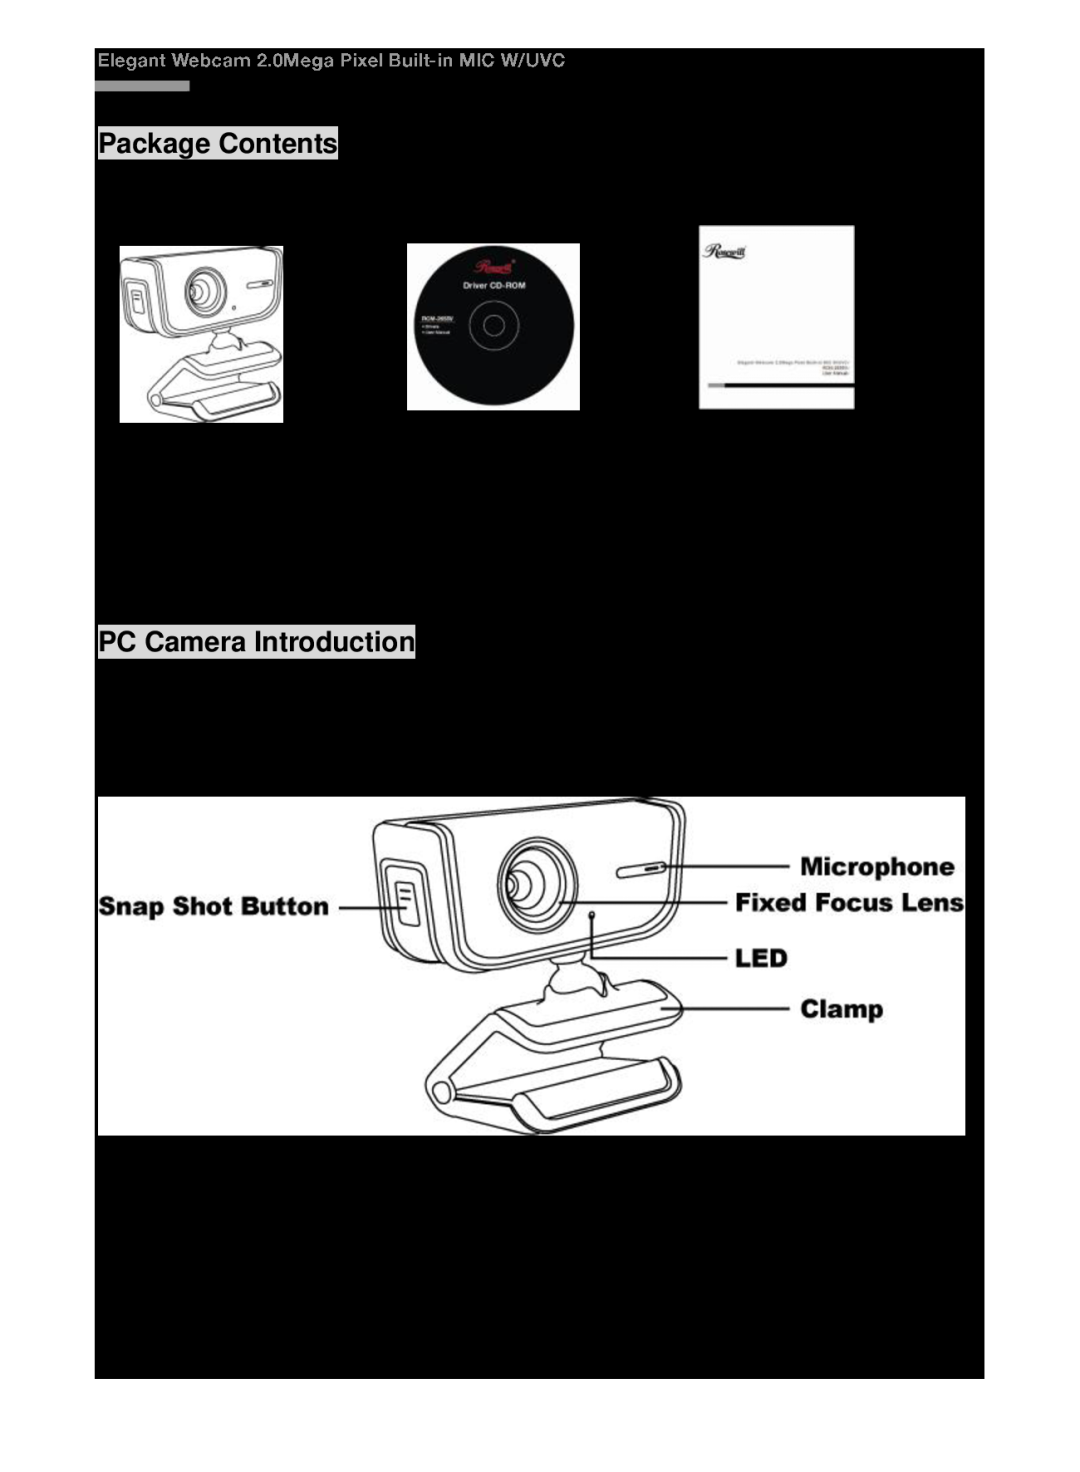 Rosewill rcm-2655-v user manual PC camera, CD-disc, User Manual, Package Contents, PC Camera Introduction 